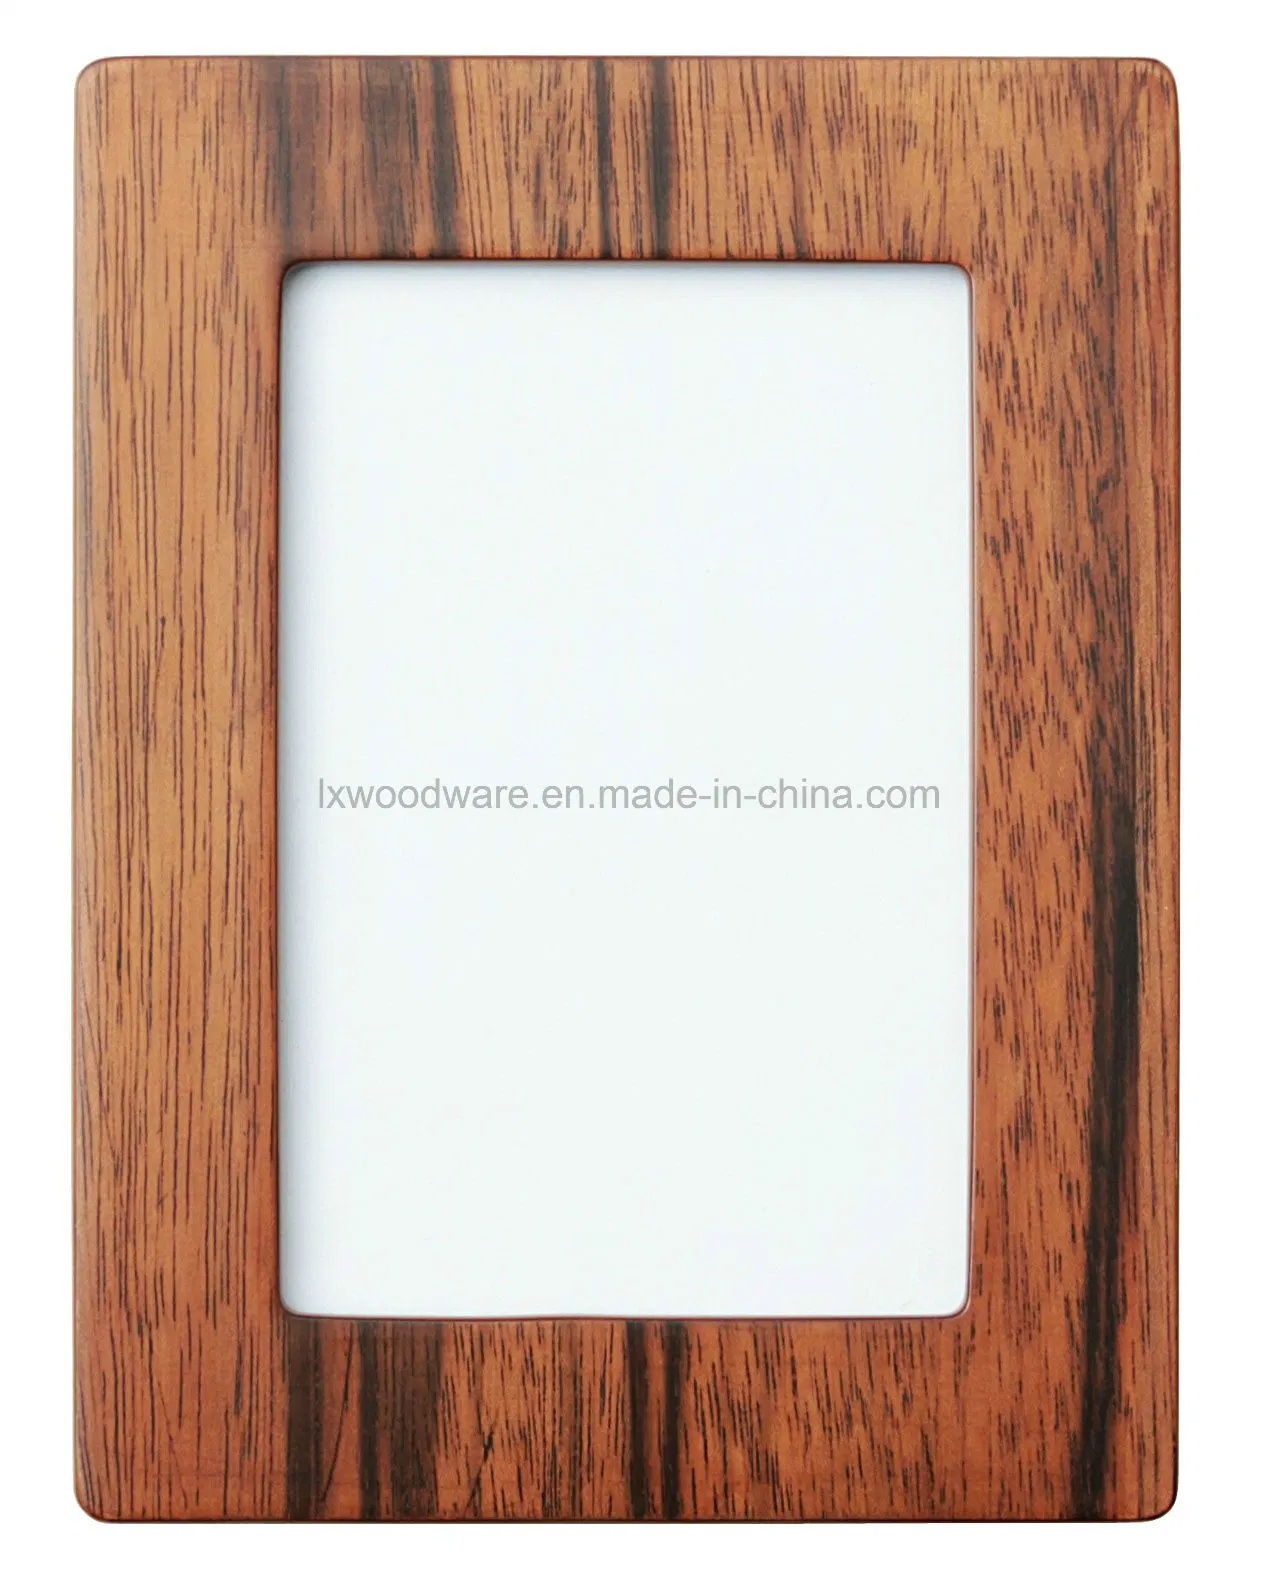 Walnuss Semi-Glossy Holz Art Craft Foto / Bilderrahmen mit Glasfenster